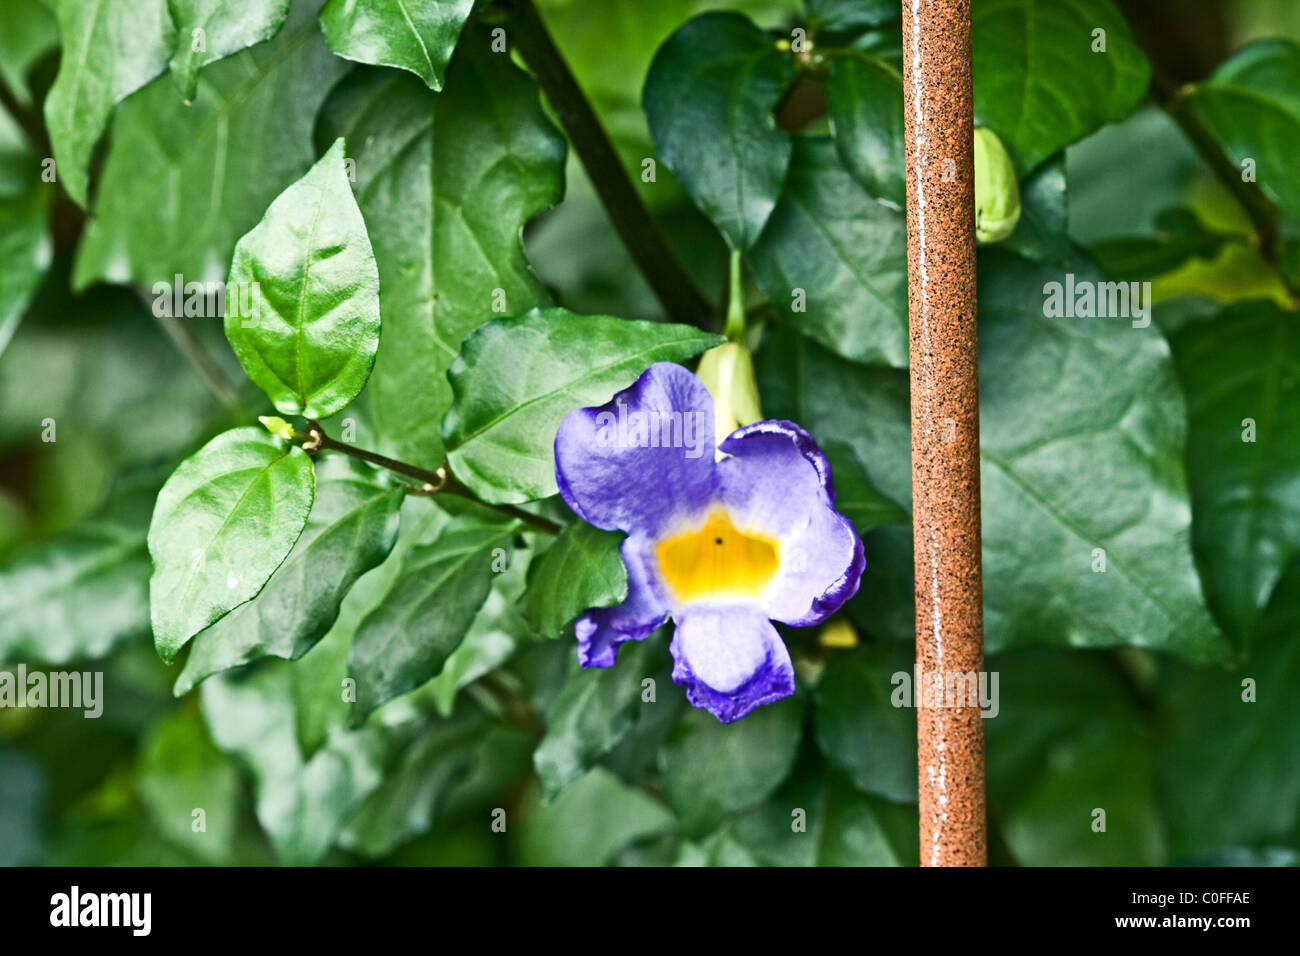 Thunbergia Erecta Kings' Mantle Live Plant Vivid Purple Trumpet Shaped Flowers among the leaves Stock Photo